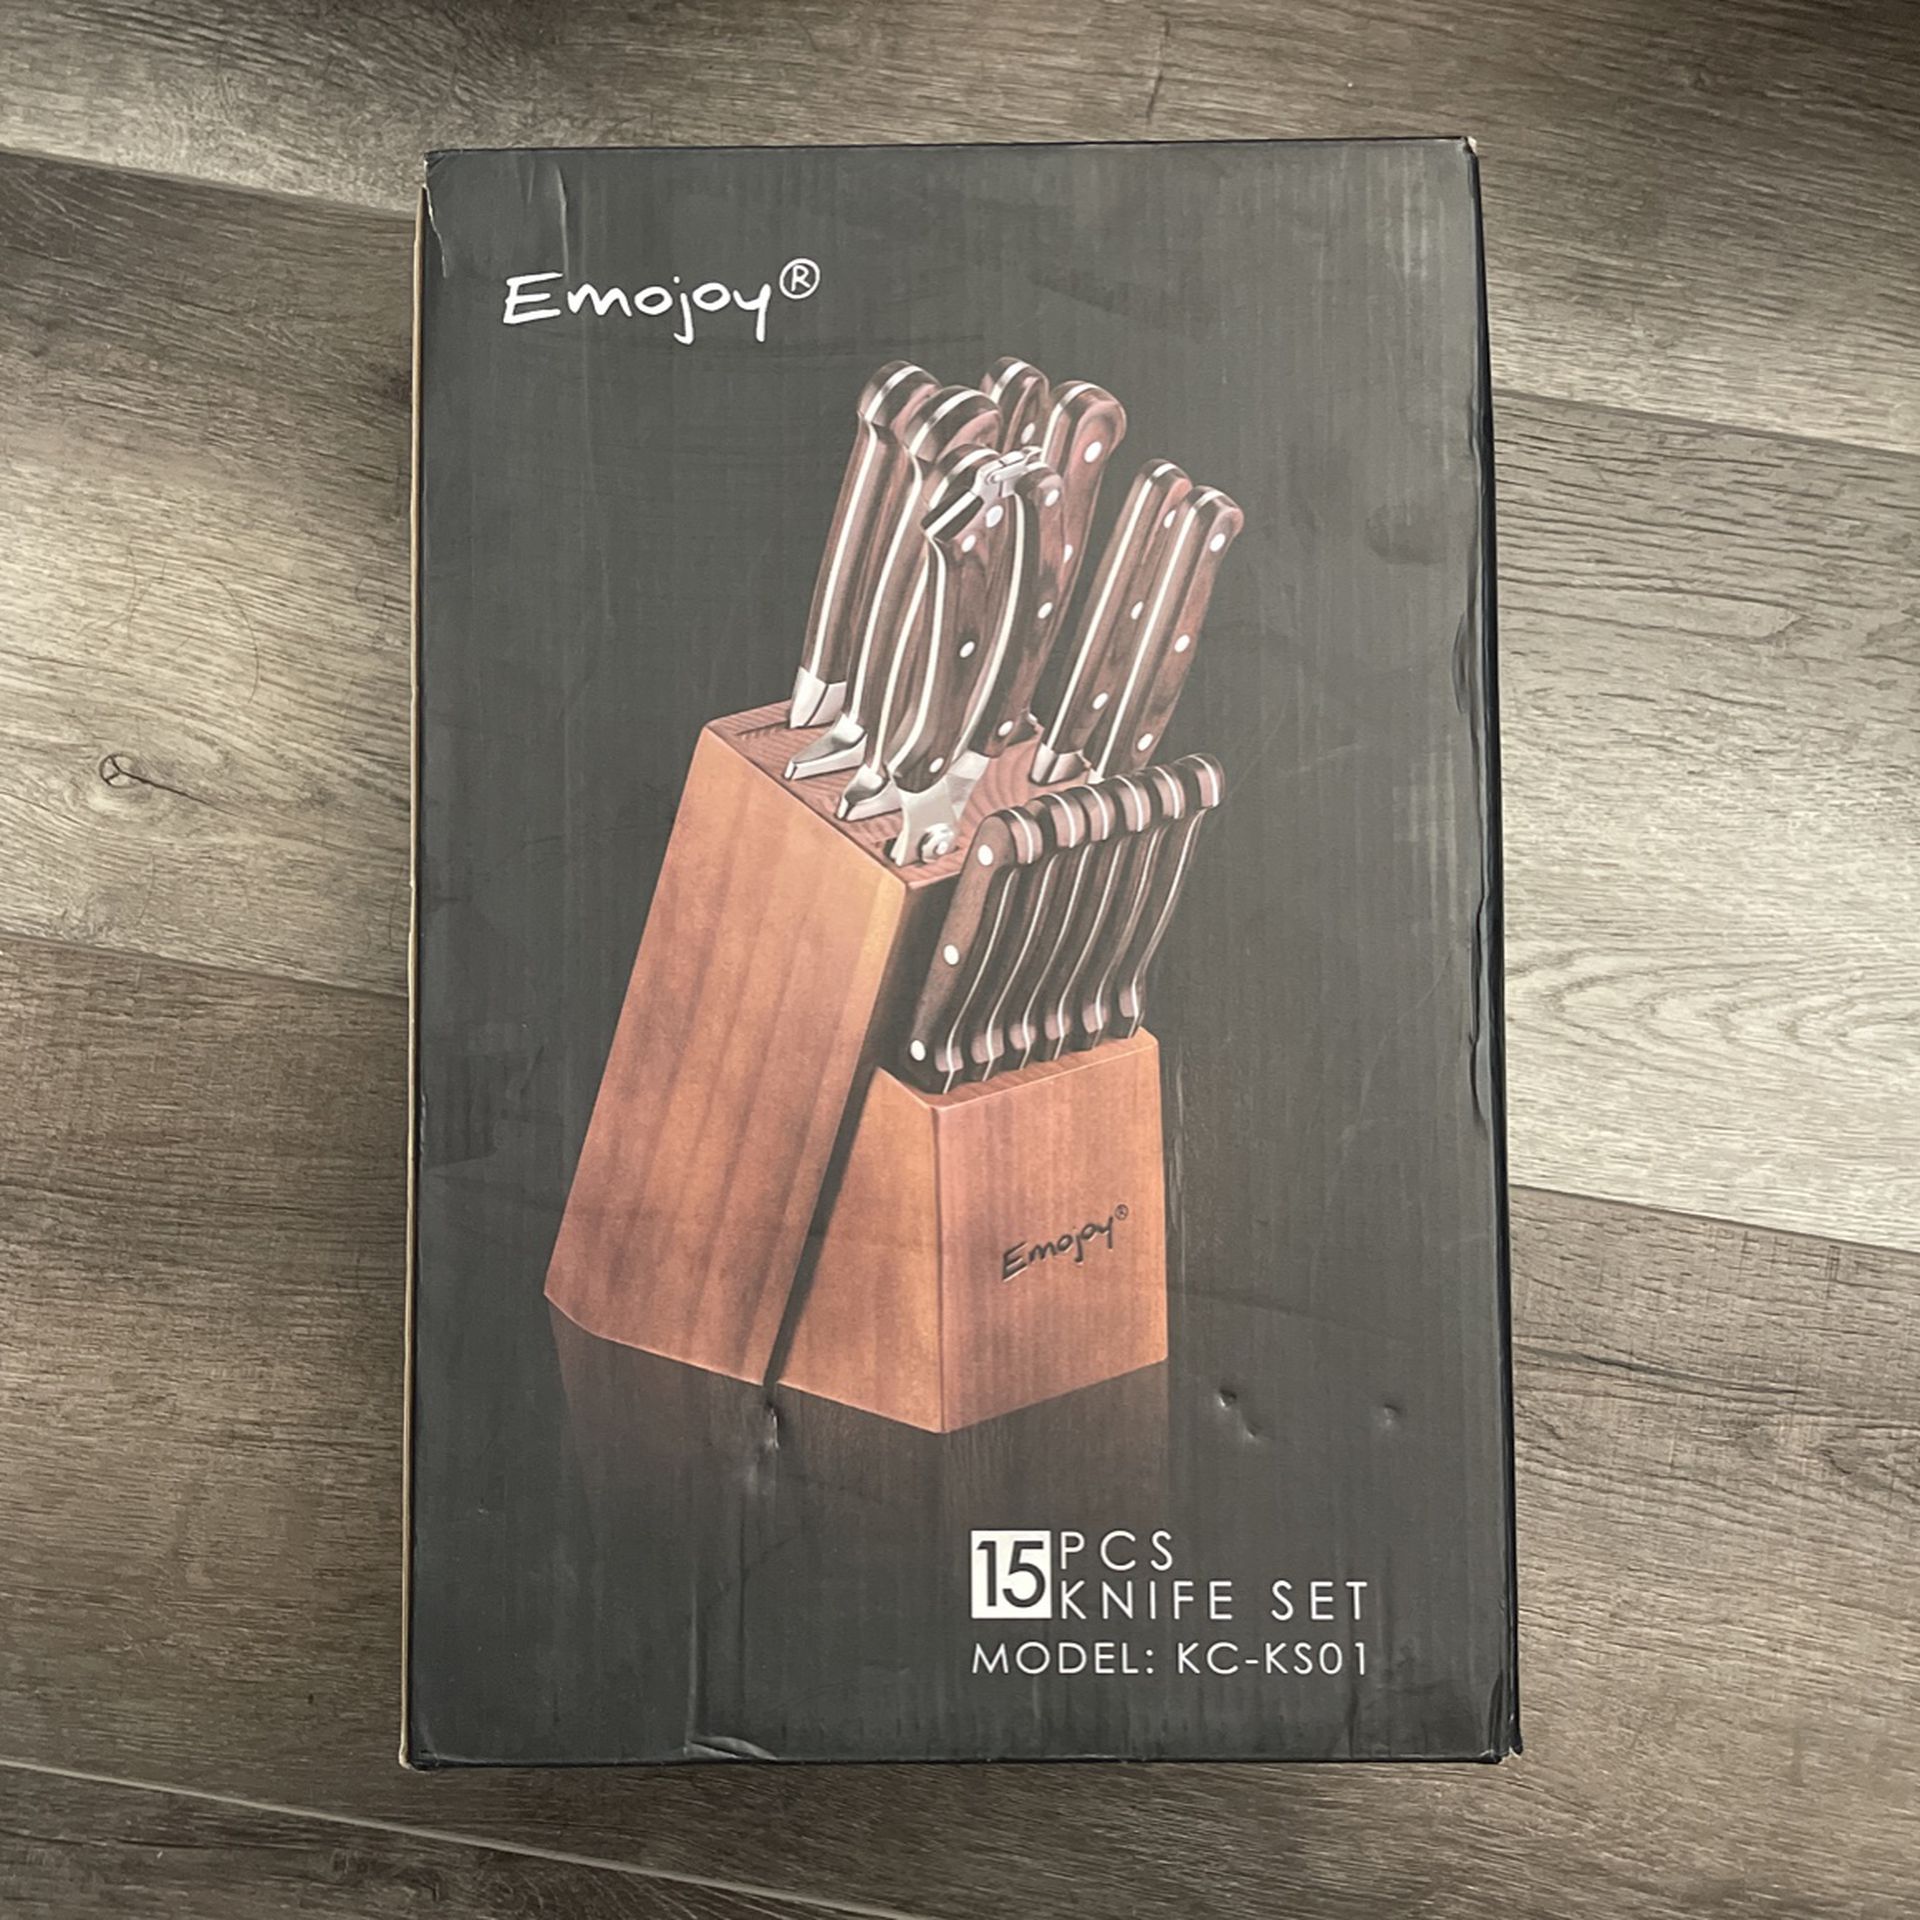 Emojoy 15 Piece Kitchen Knife Set with Block Wooden for Sale in Hemet, CA -  OfferUp